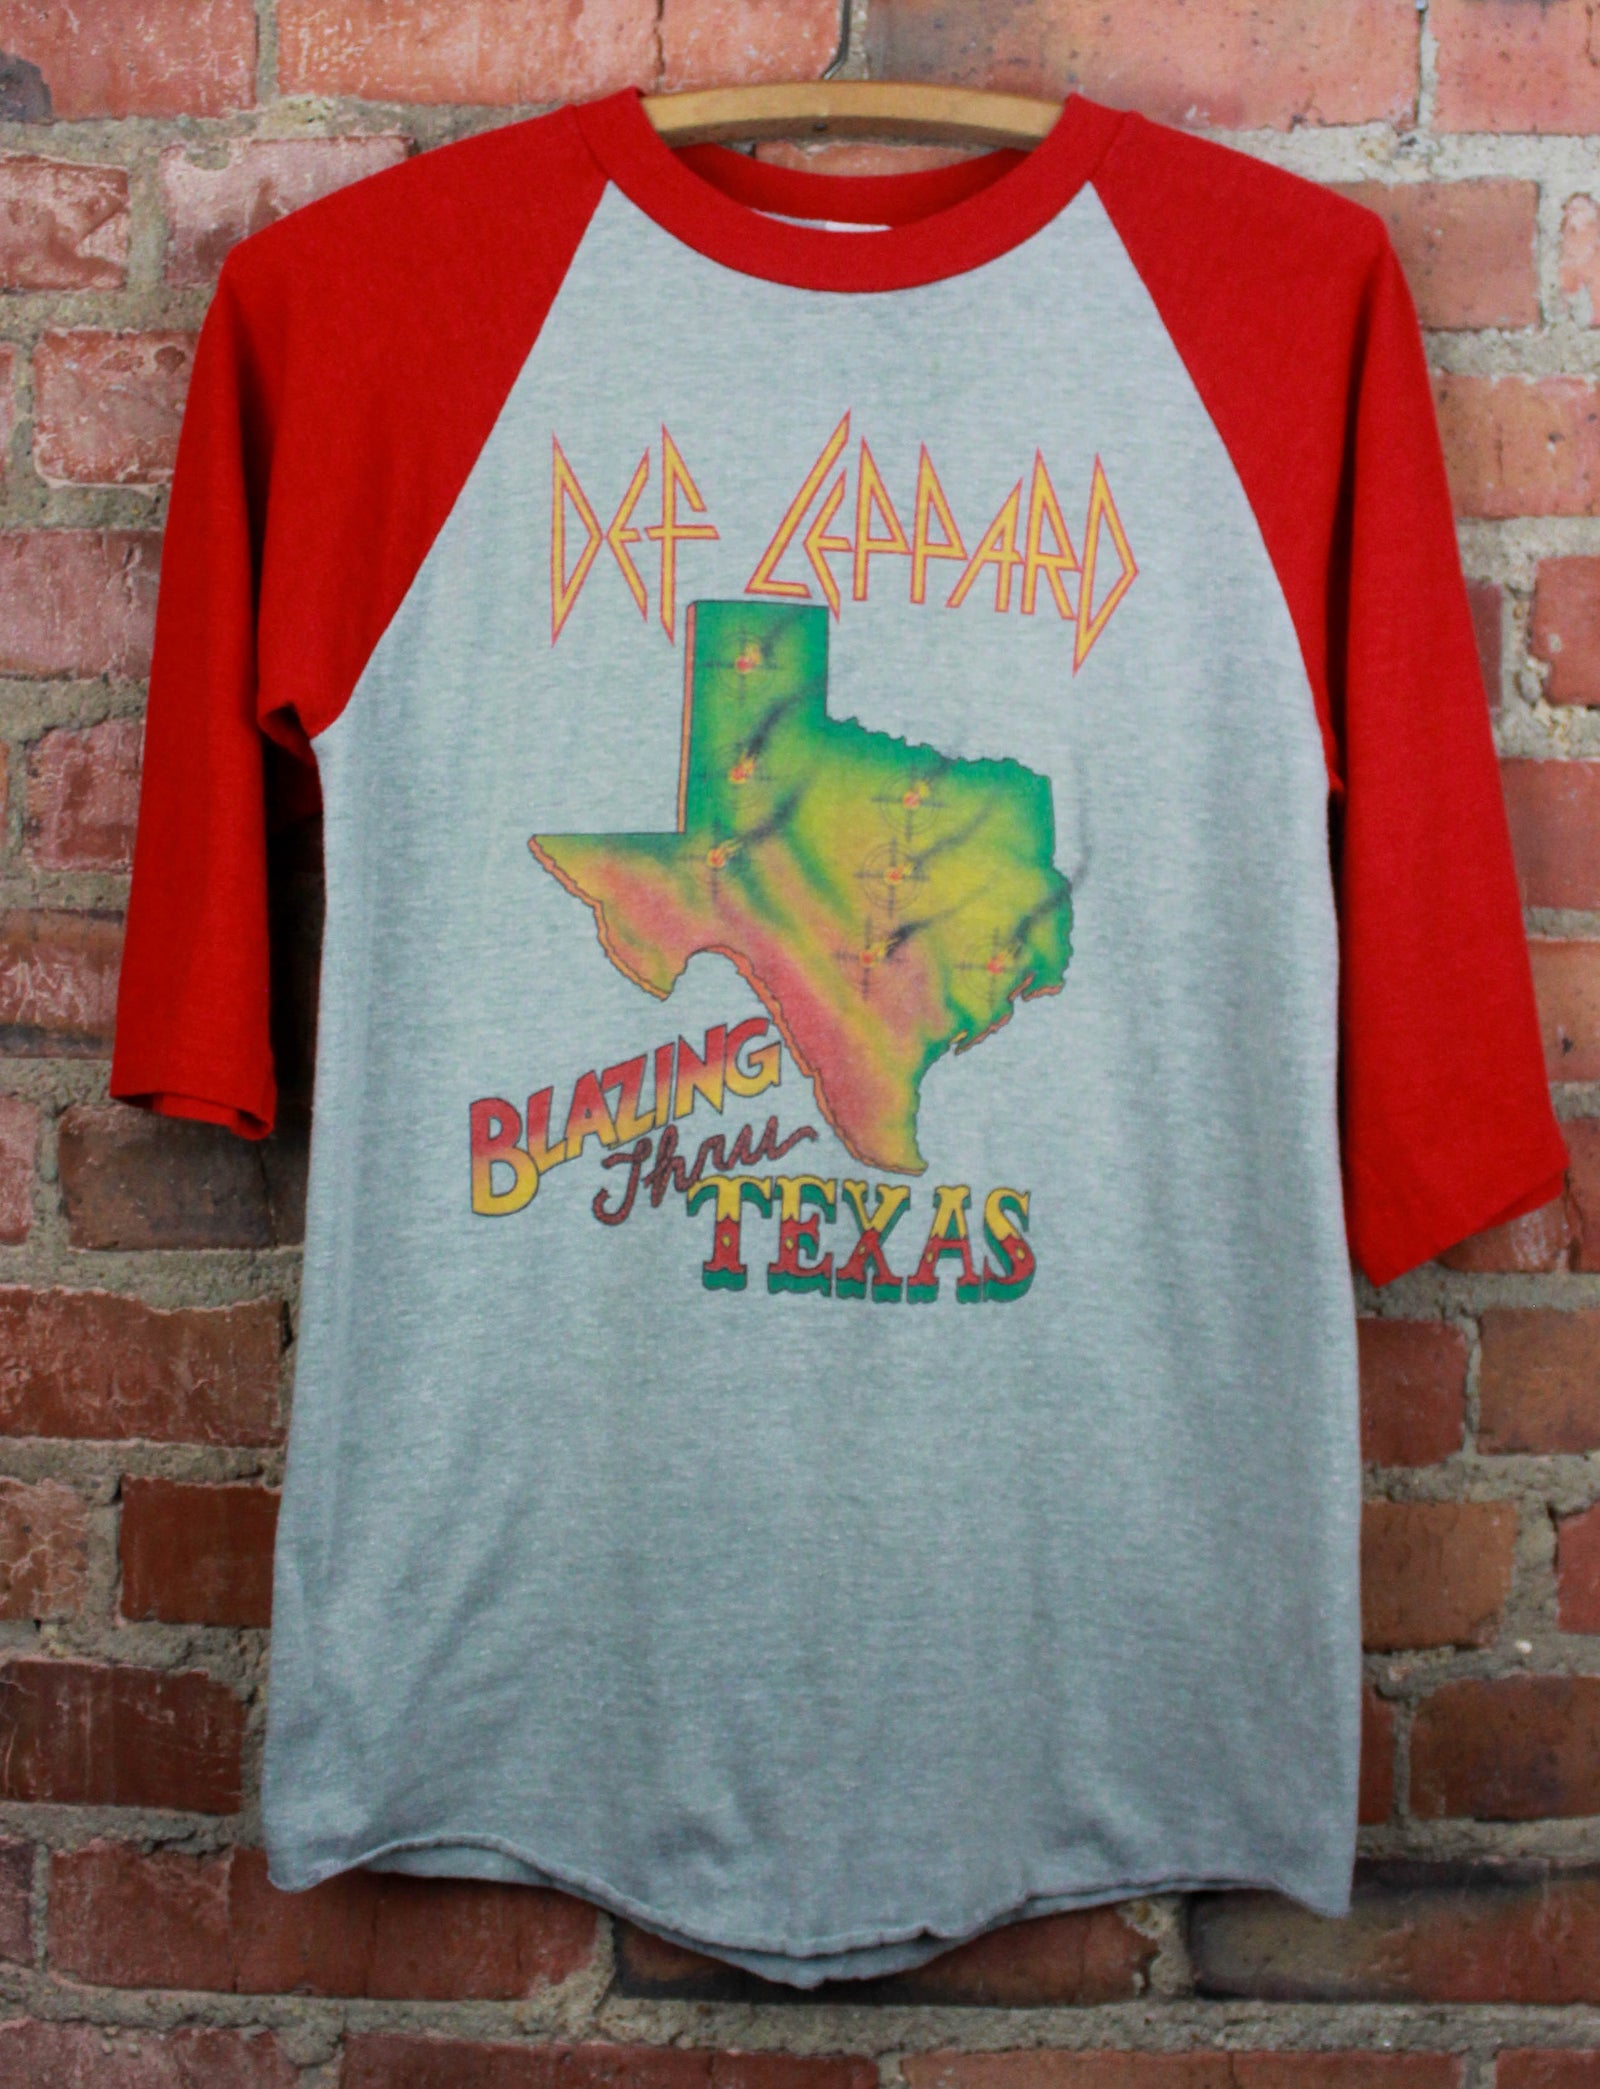 Vintage 1983 Def Leppard Concert T Shirt Raglan Jersey Pyromania Tour Blazing Through Texas Red Grey Unisex Small